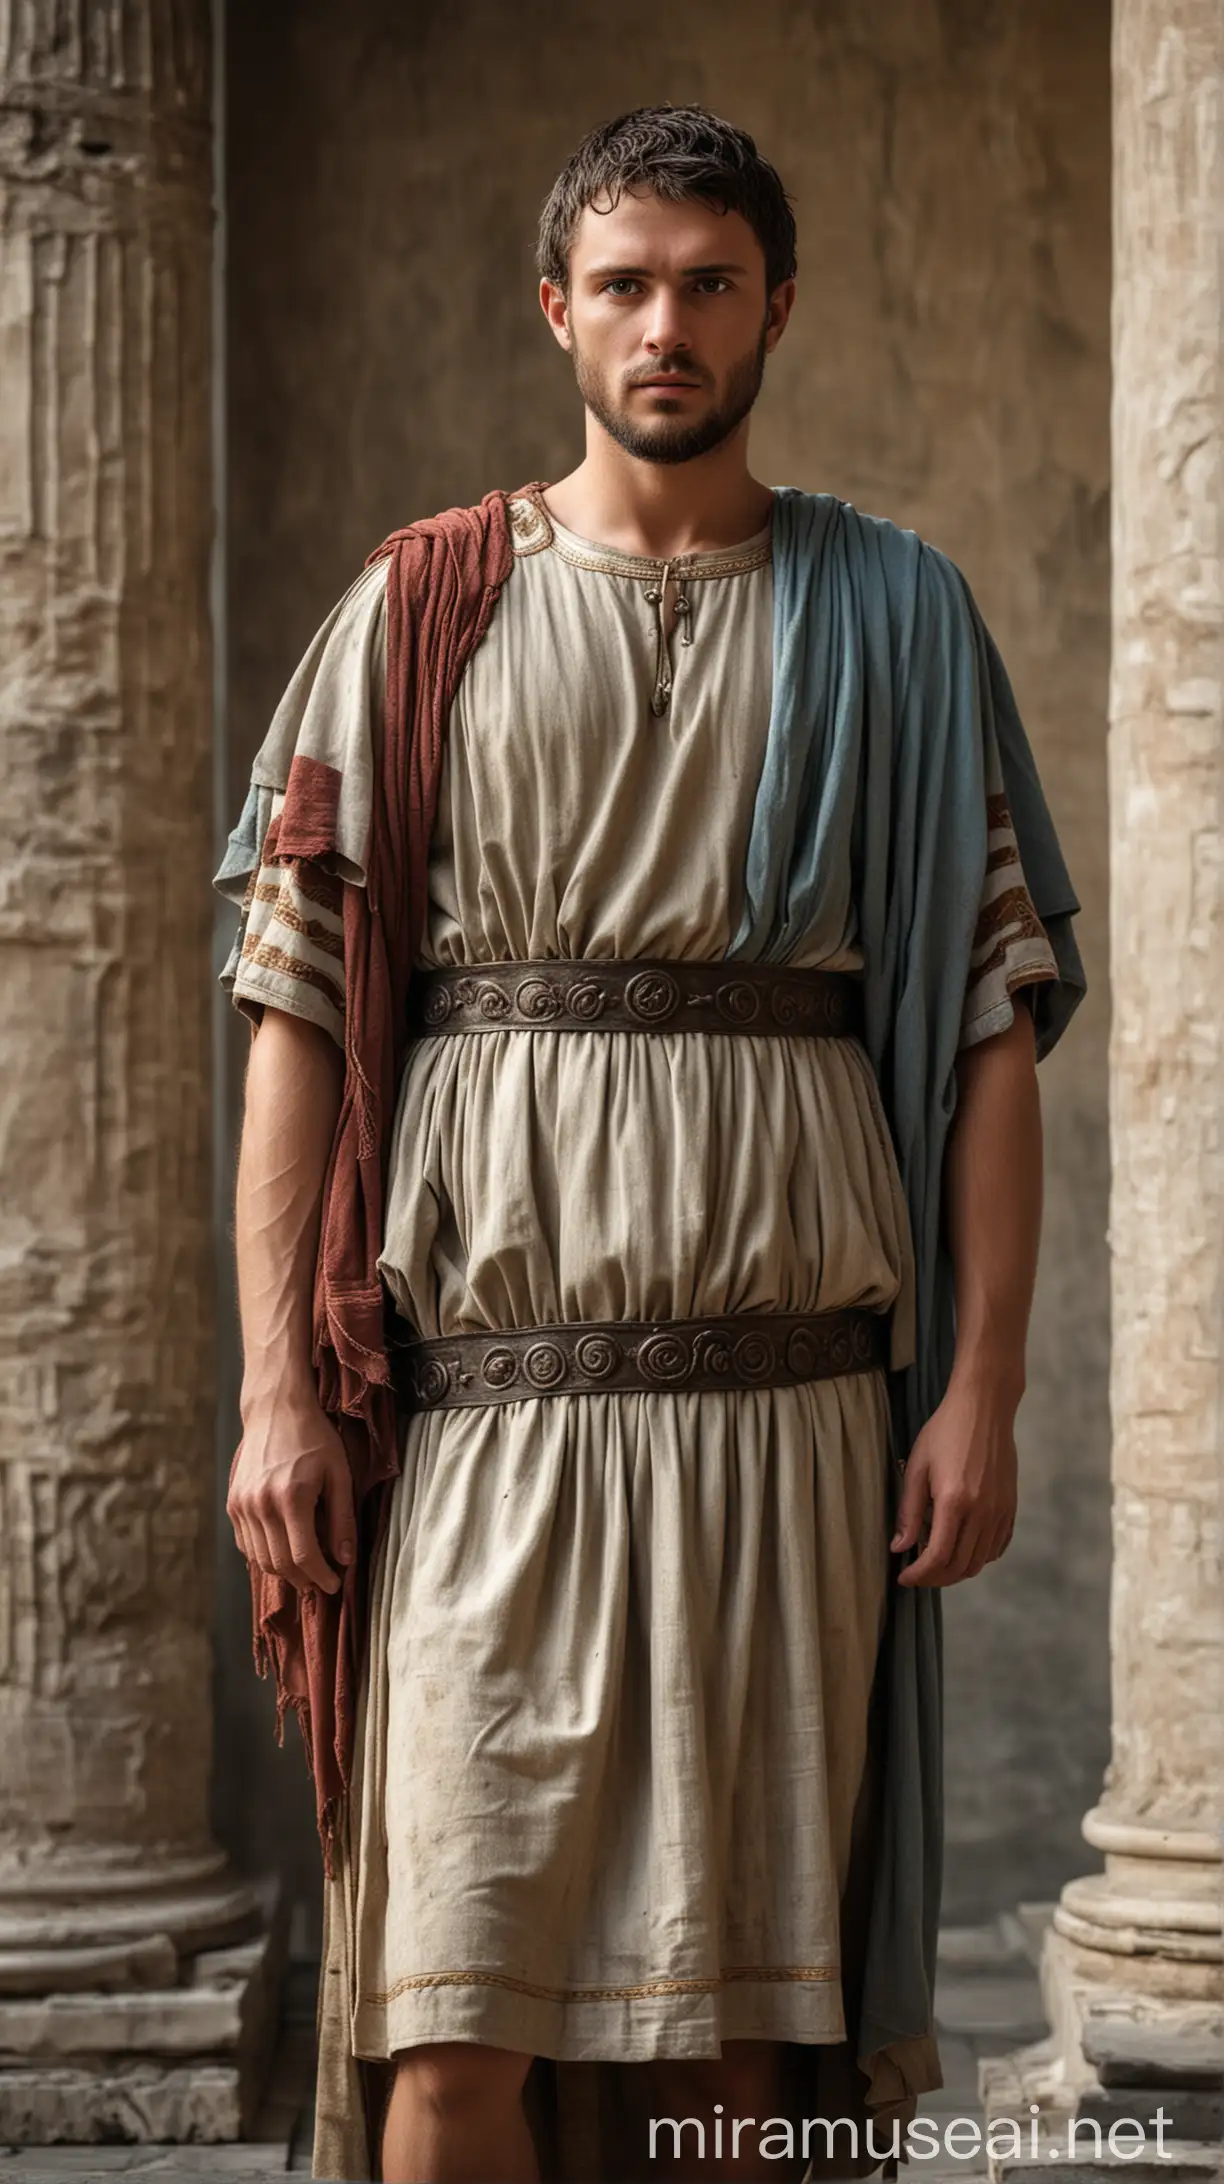 Portrait of Quartus Early Christian in Ancient Roman Attire